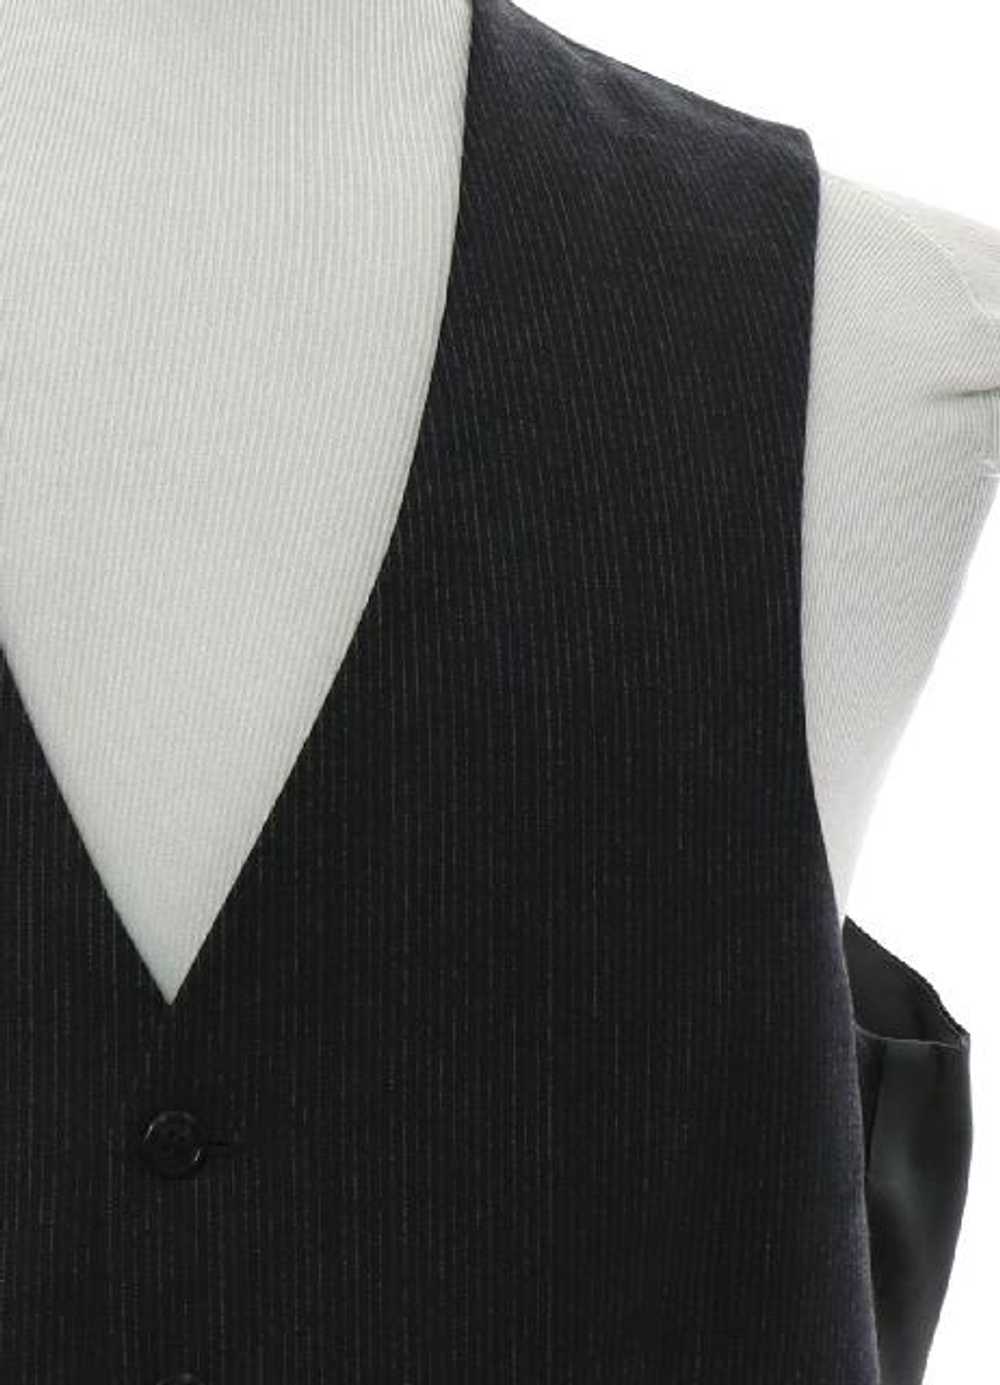 1990's Mens Charcoal Grey Pinstriped Suit Vest - image 2